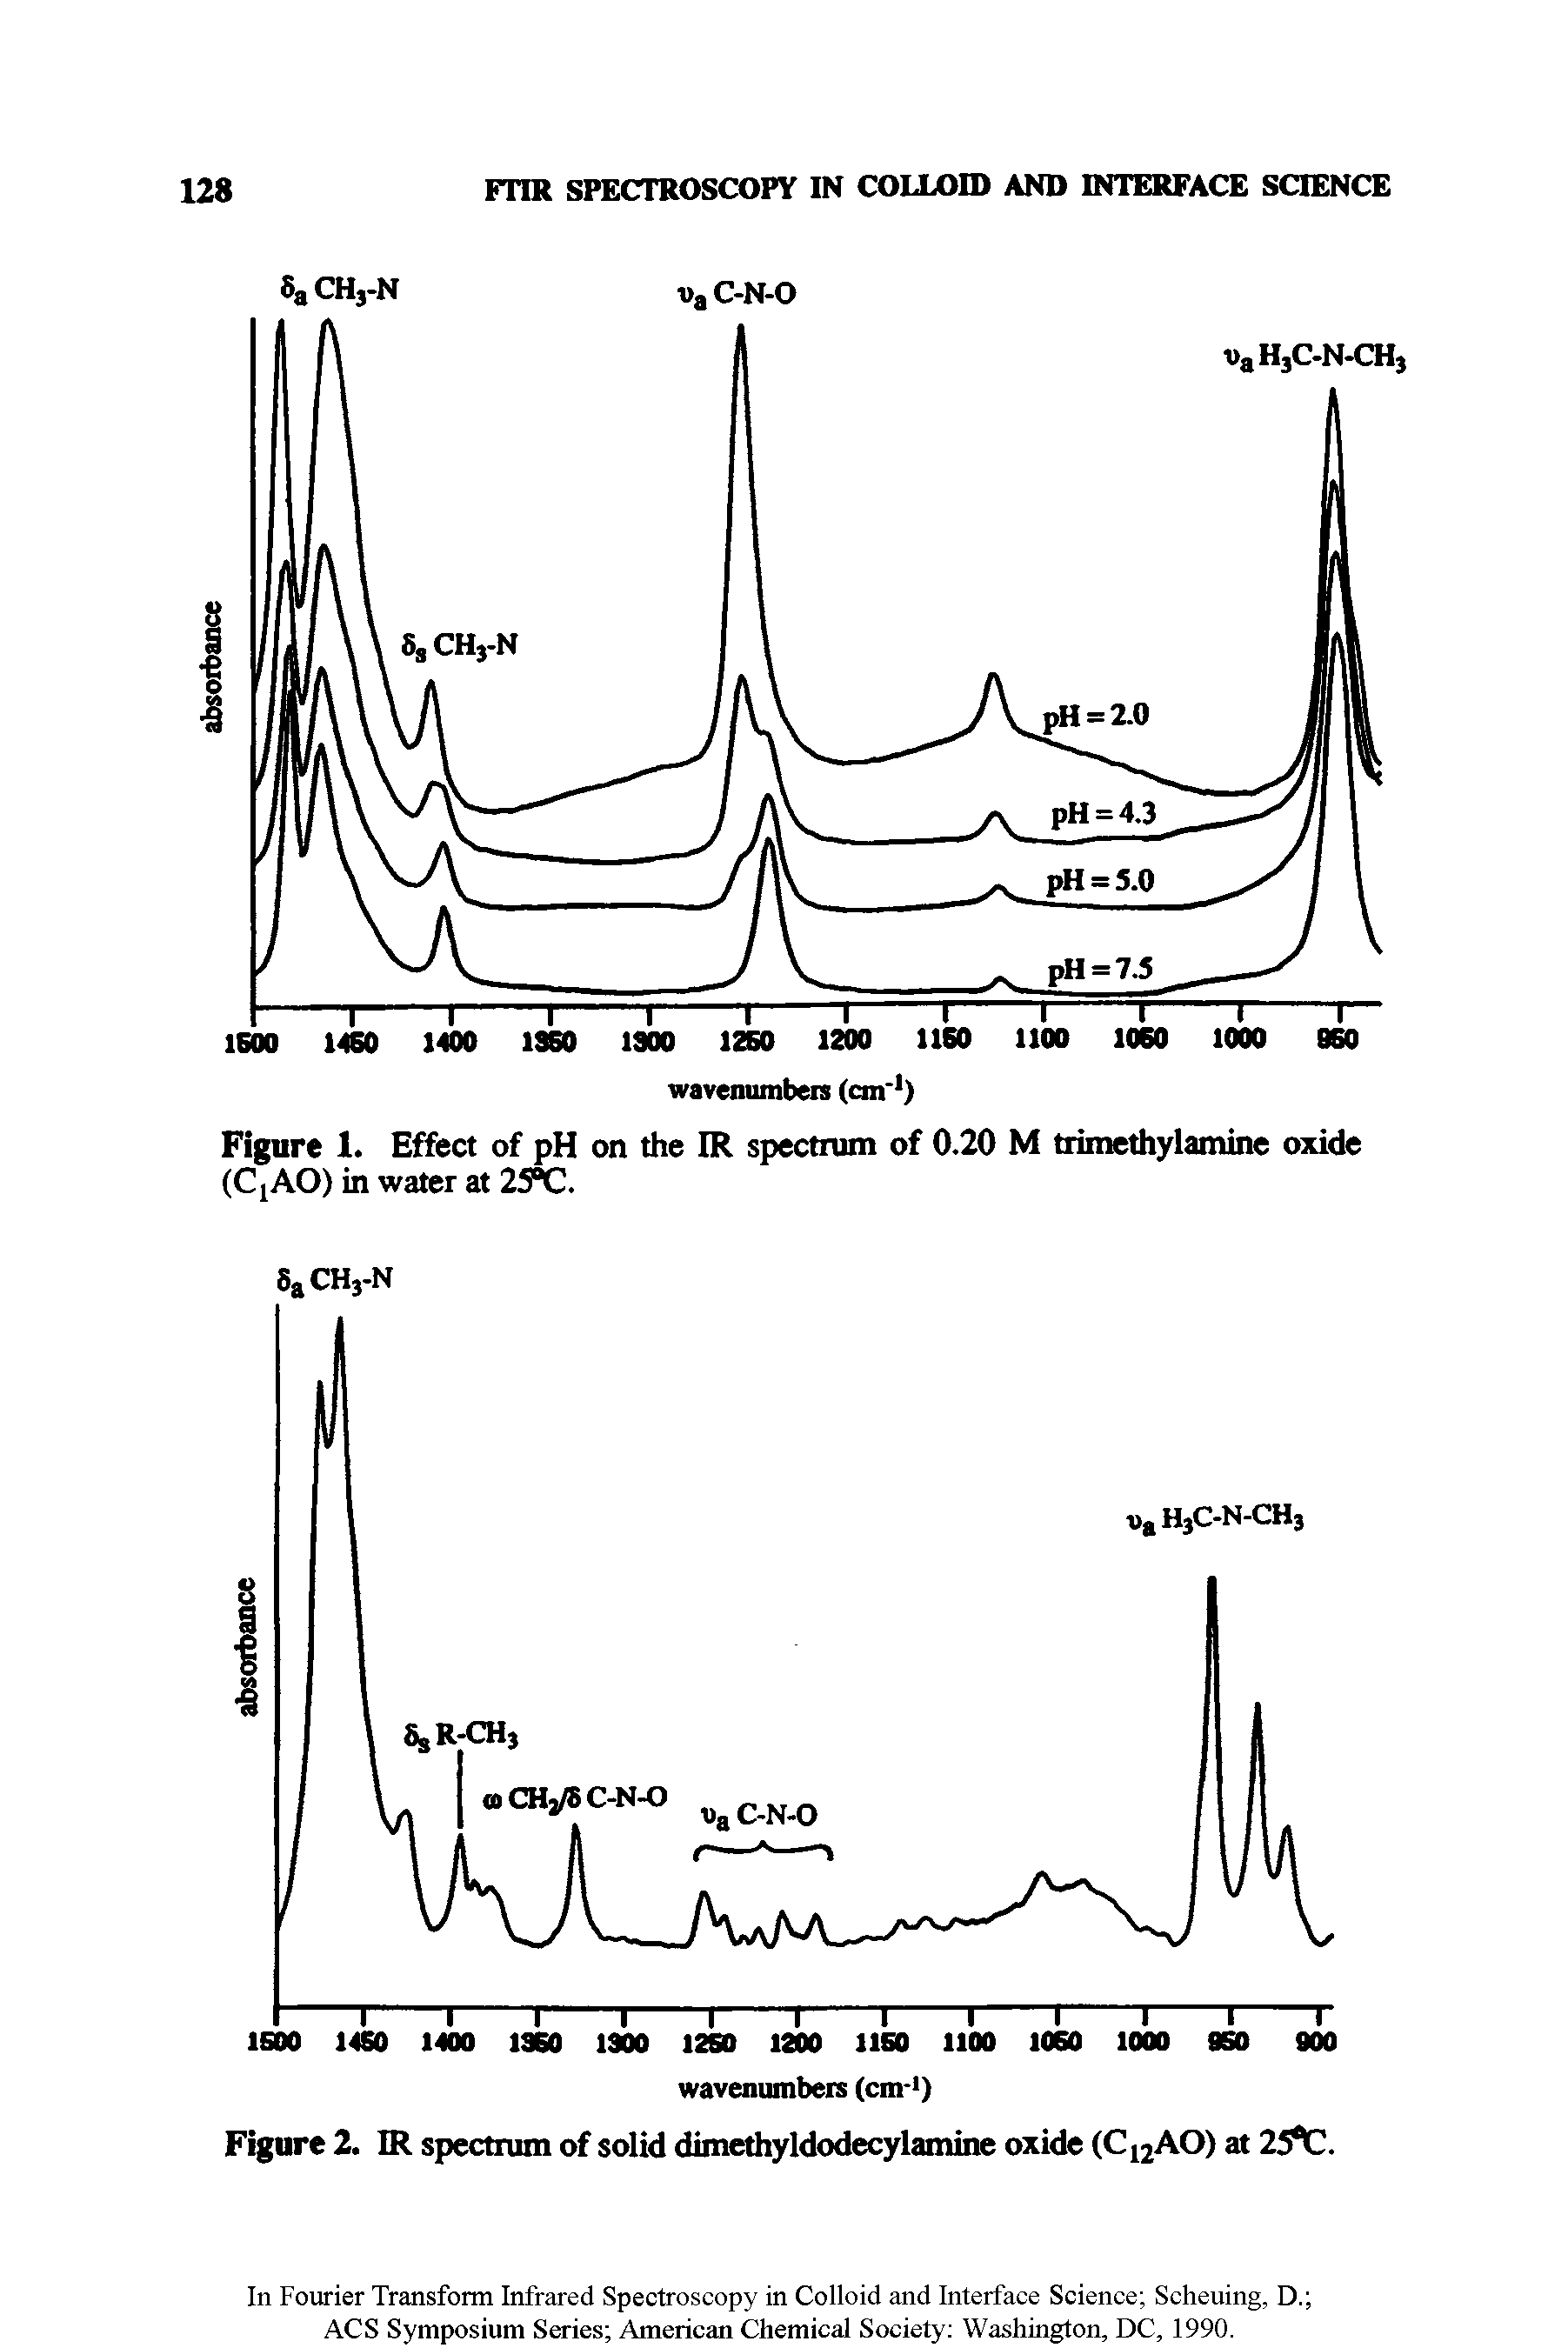 Figure 1. Effect of pH on the IR spectrum of 0.20 M trimethylamine oxide (CjAO) in water at 25 C.